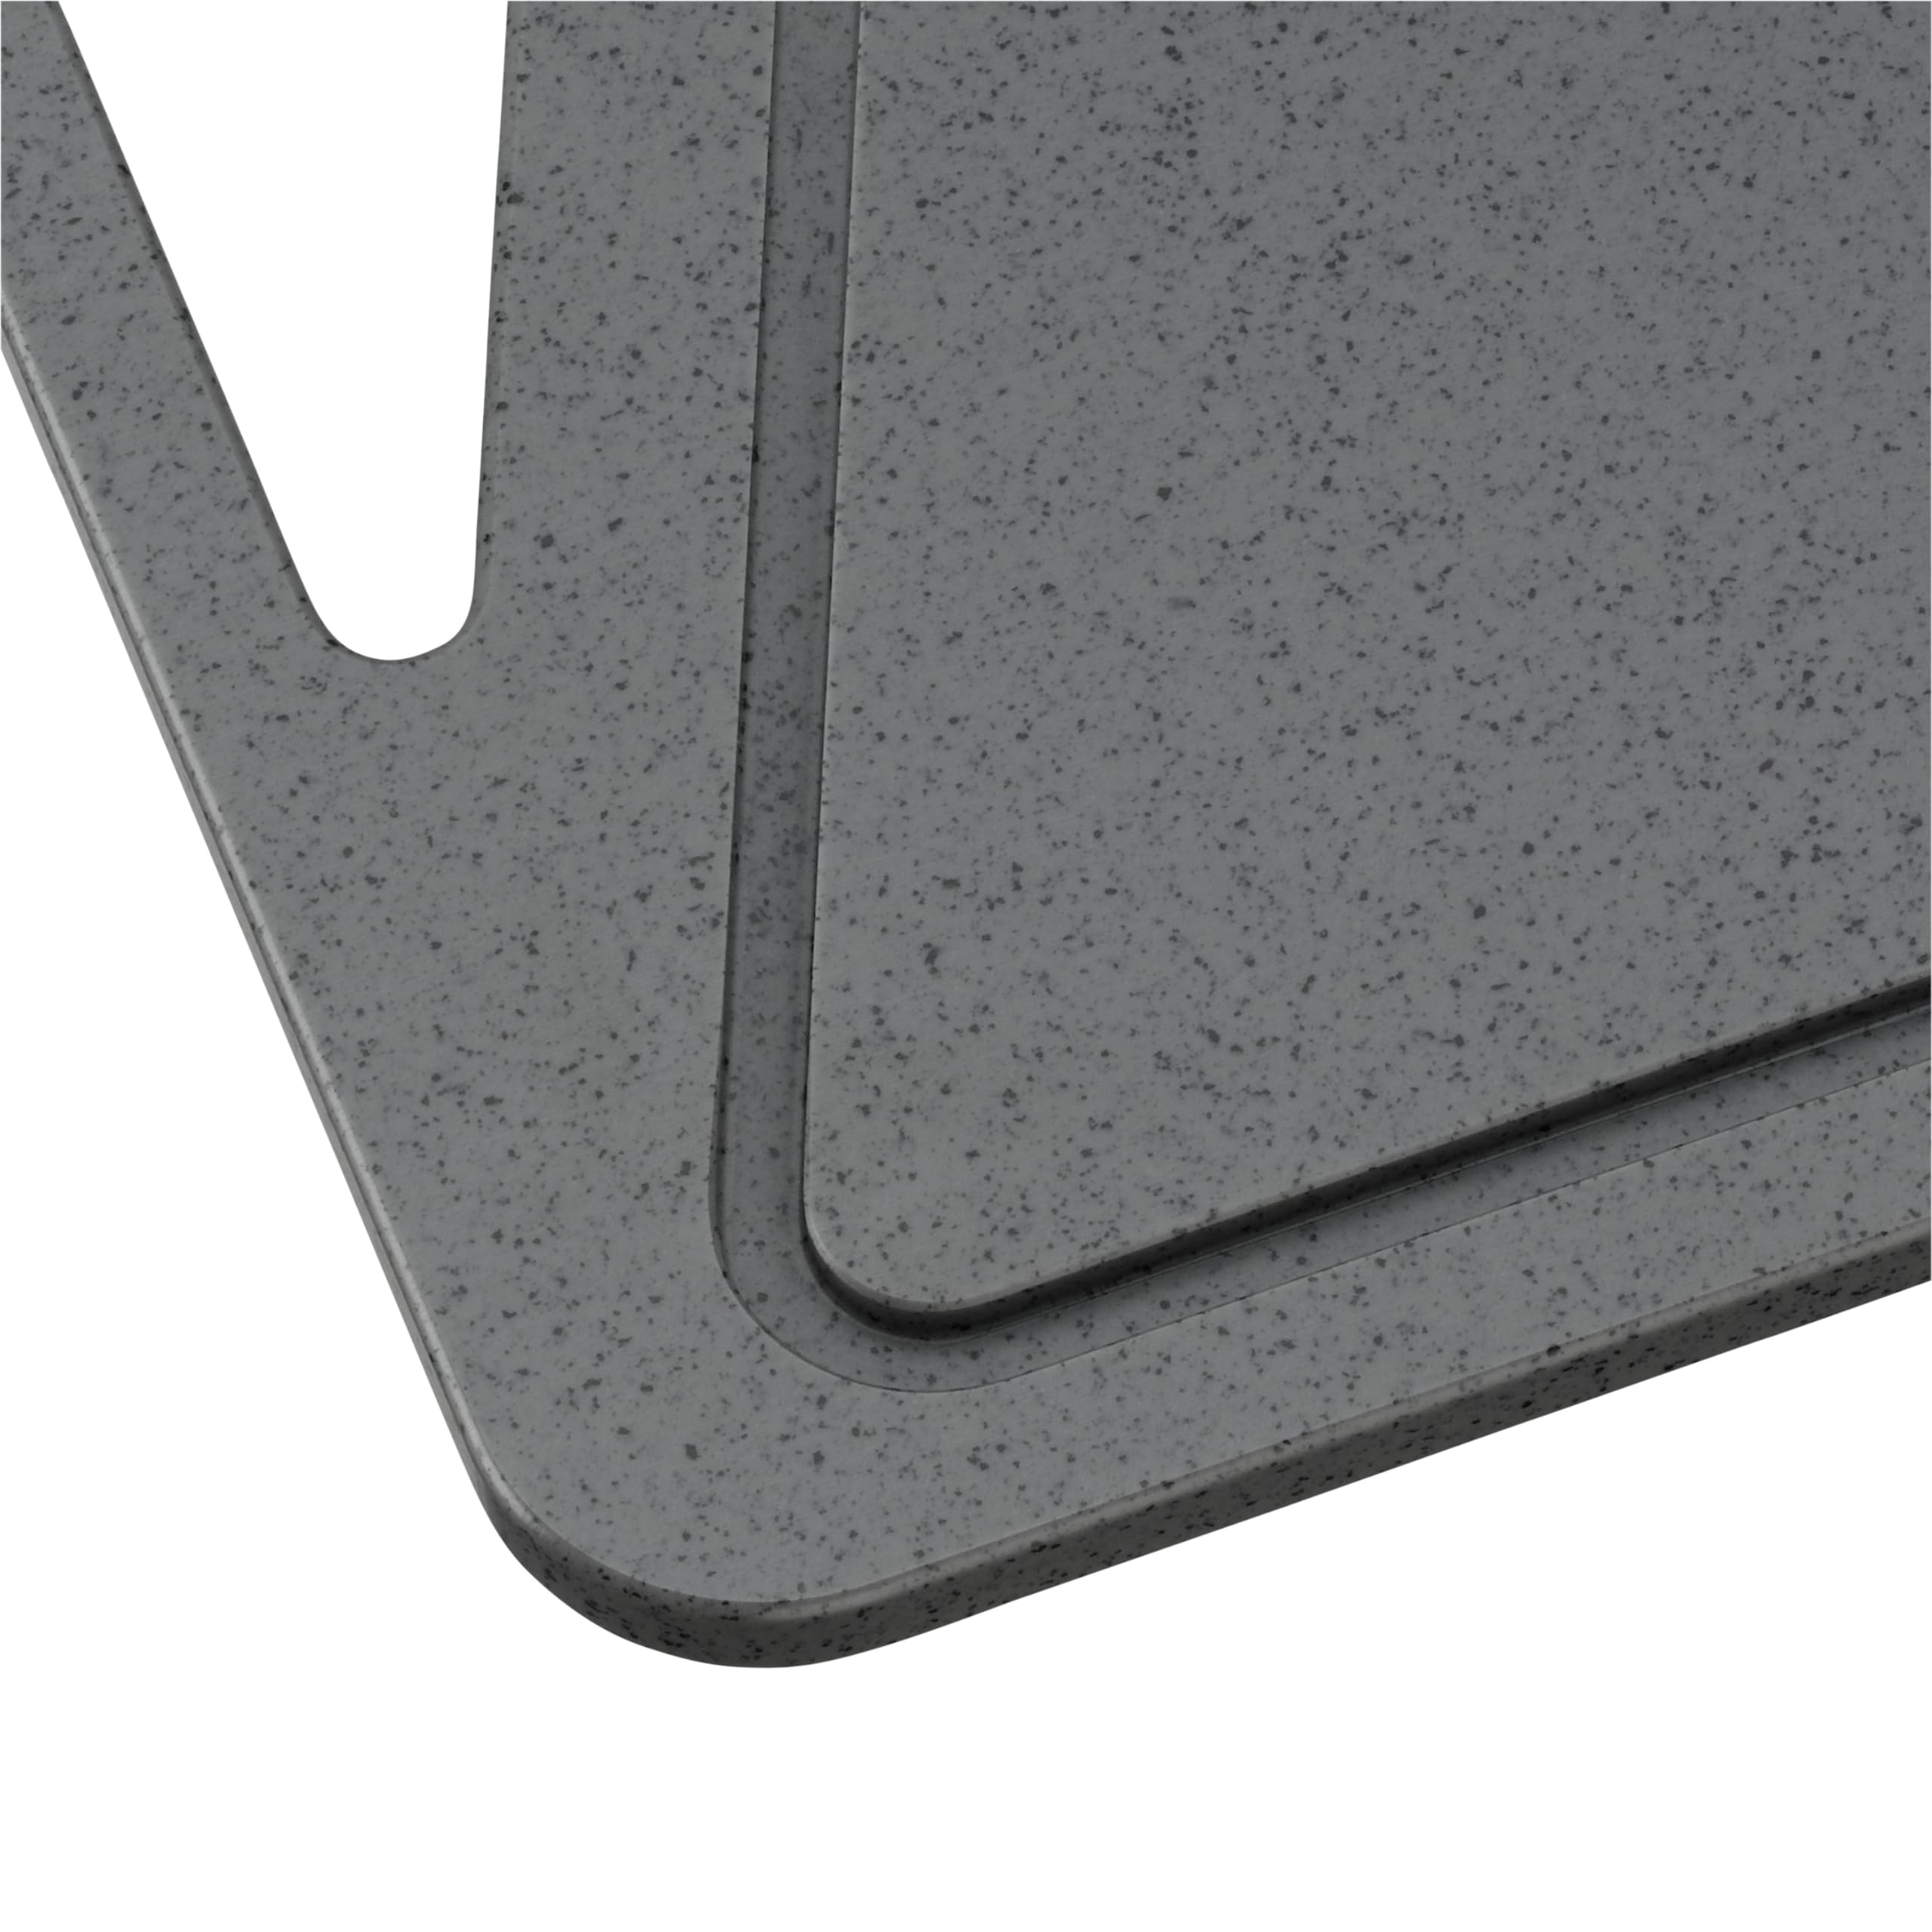 WMF Cutting Board, Stainless Steel, Grey, 38 x 25 cm